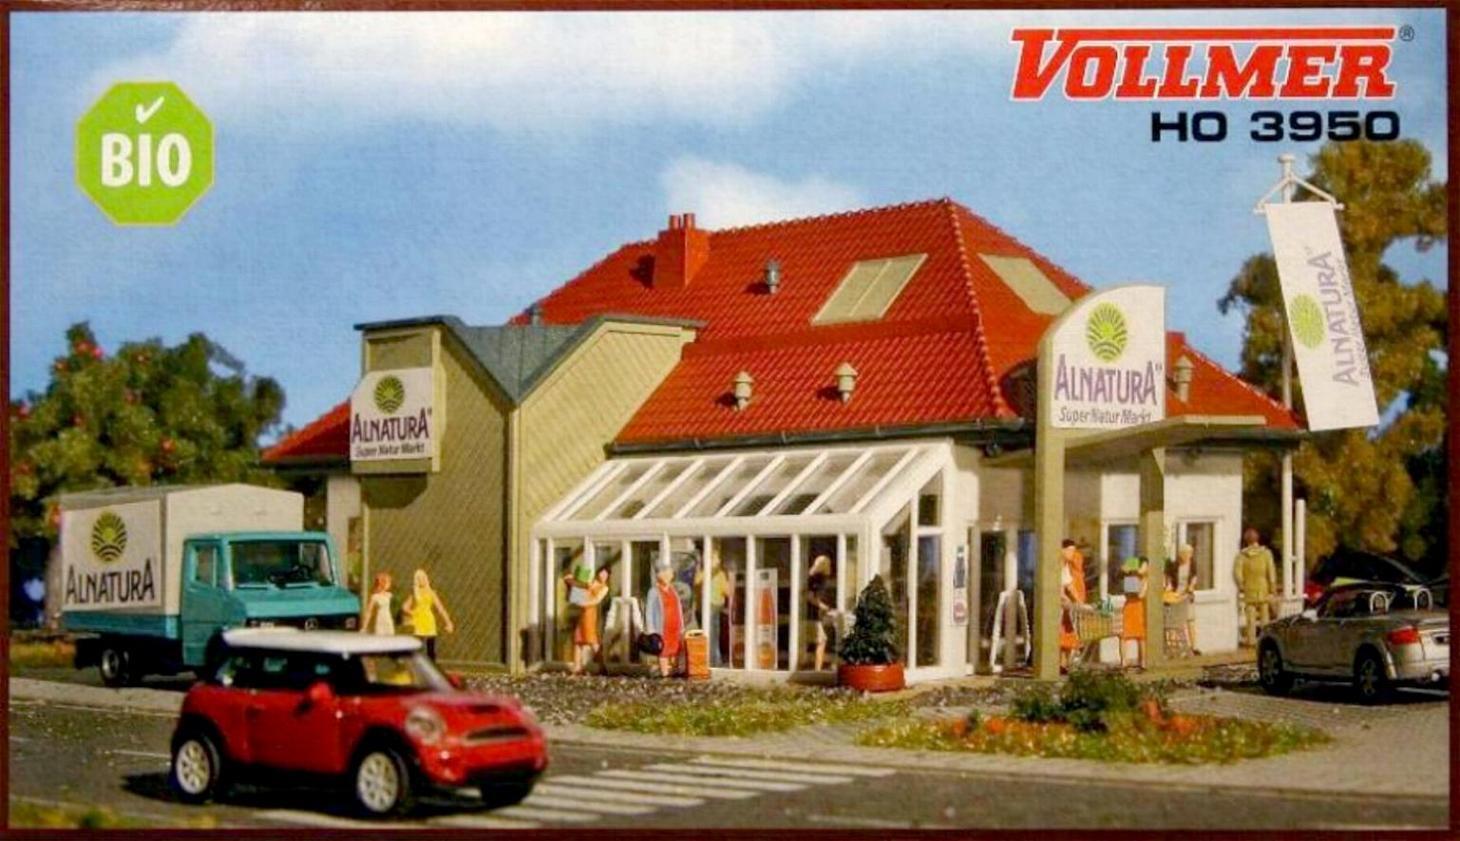 Vollmer 3950 Kit "Alnatura supermarché" piste h0 OVP 